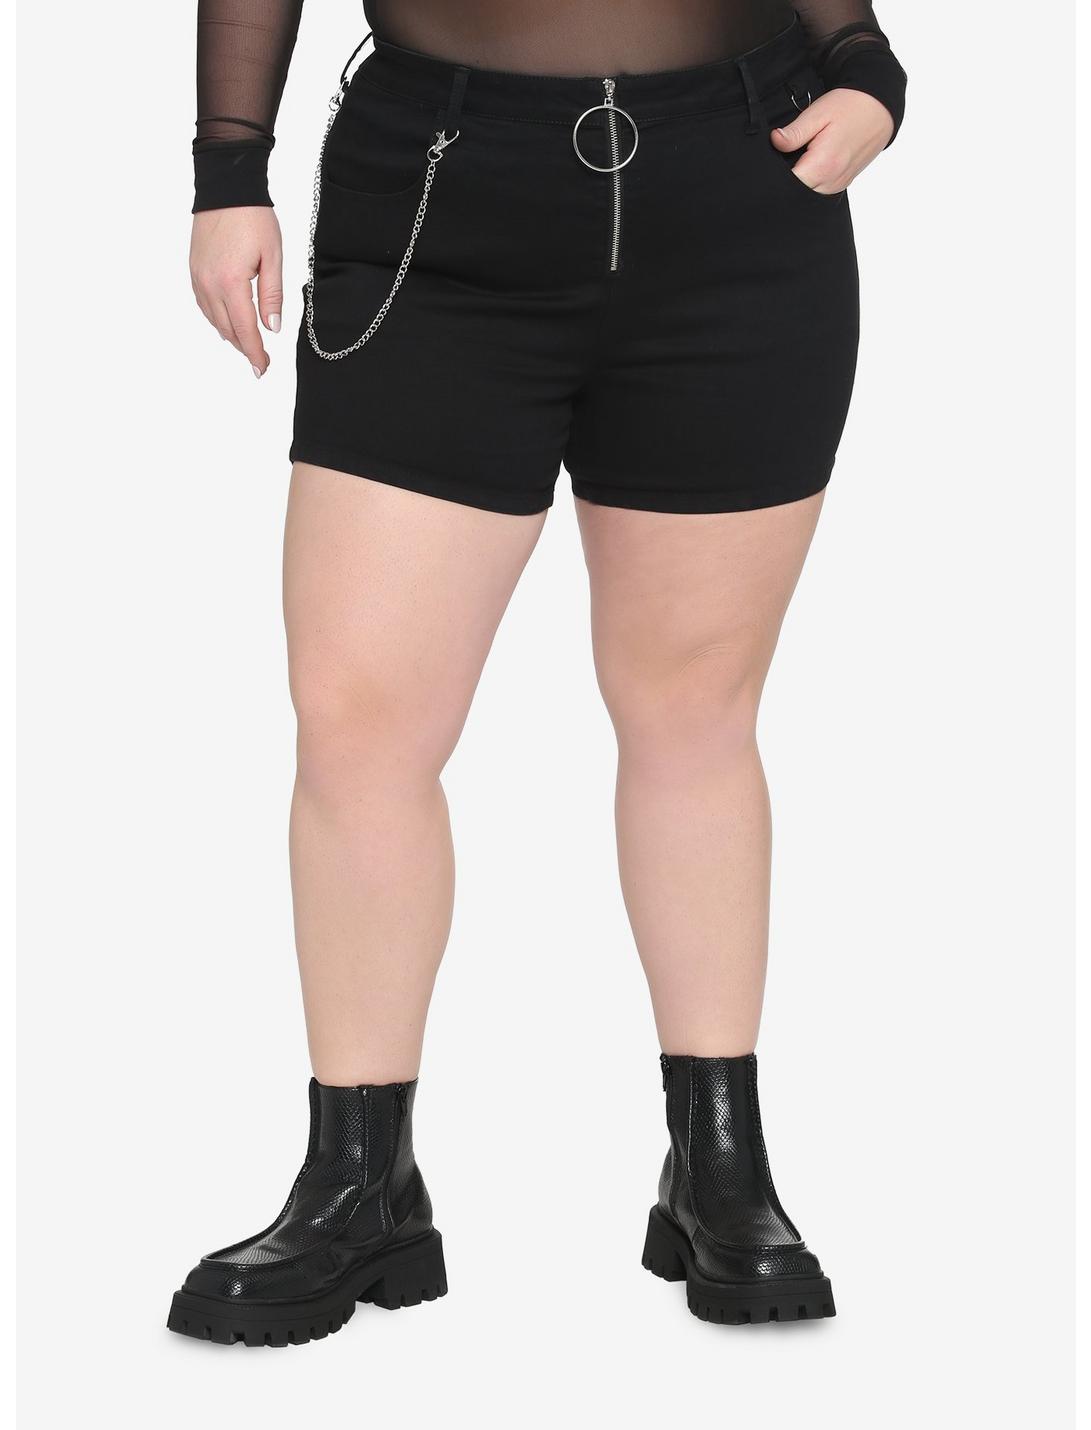 Black Front Zipper High-Waisted Shorts Plus Size, BLACK, hi-res